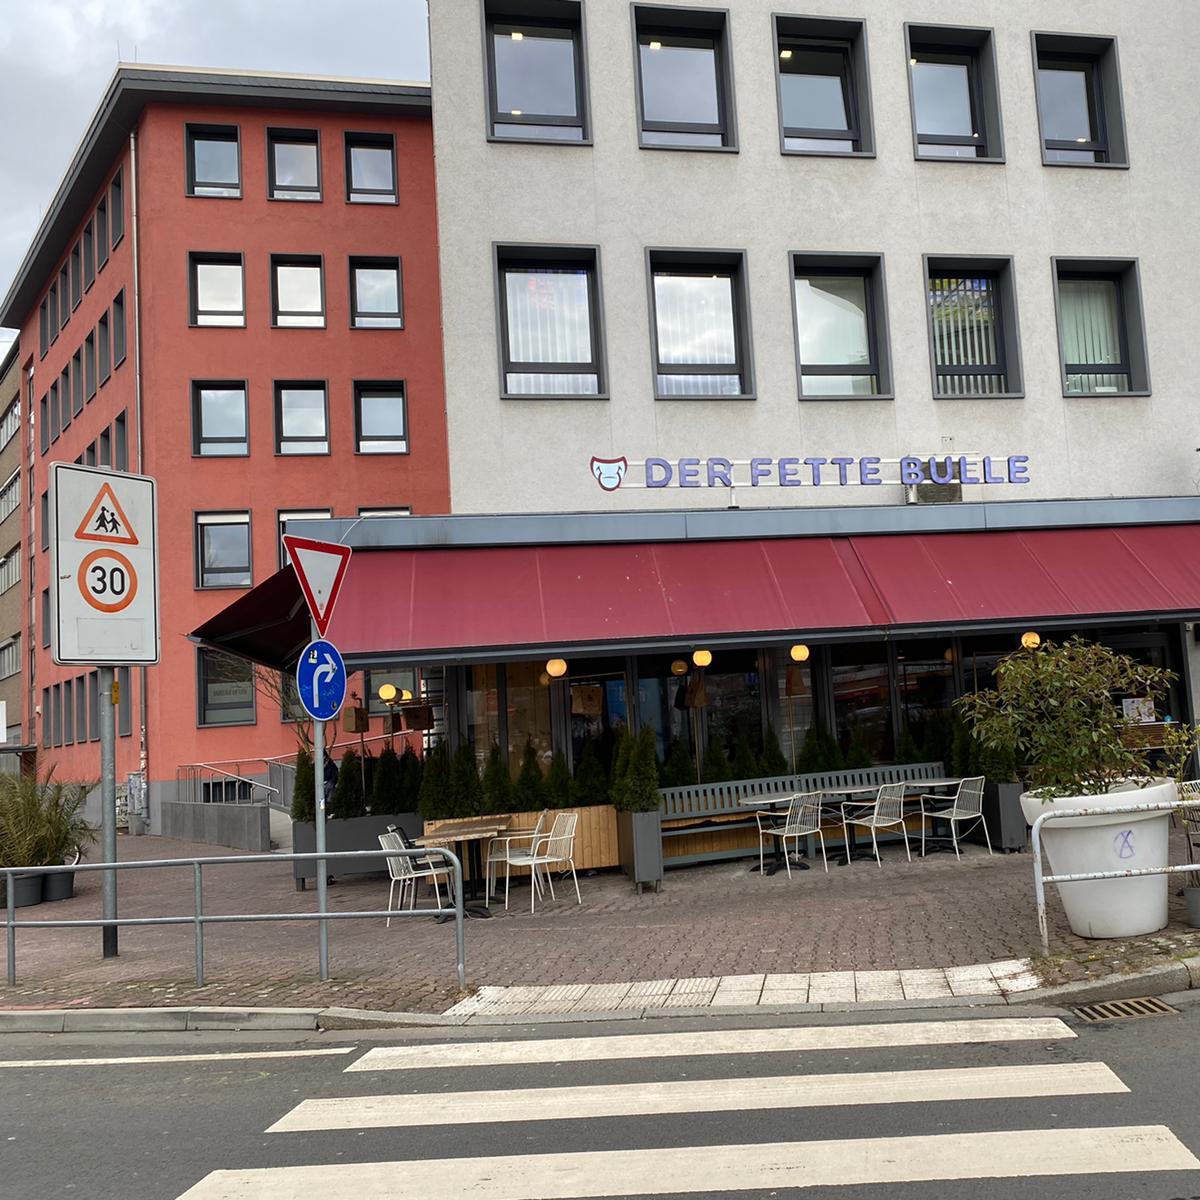 Restaurant "Der Fette Bulle OEDER WEG" in Frankfurt am Main